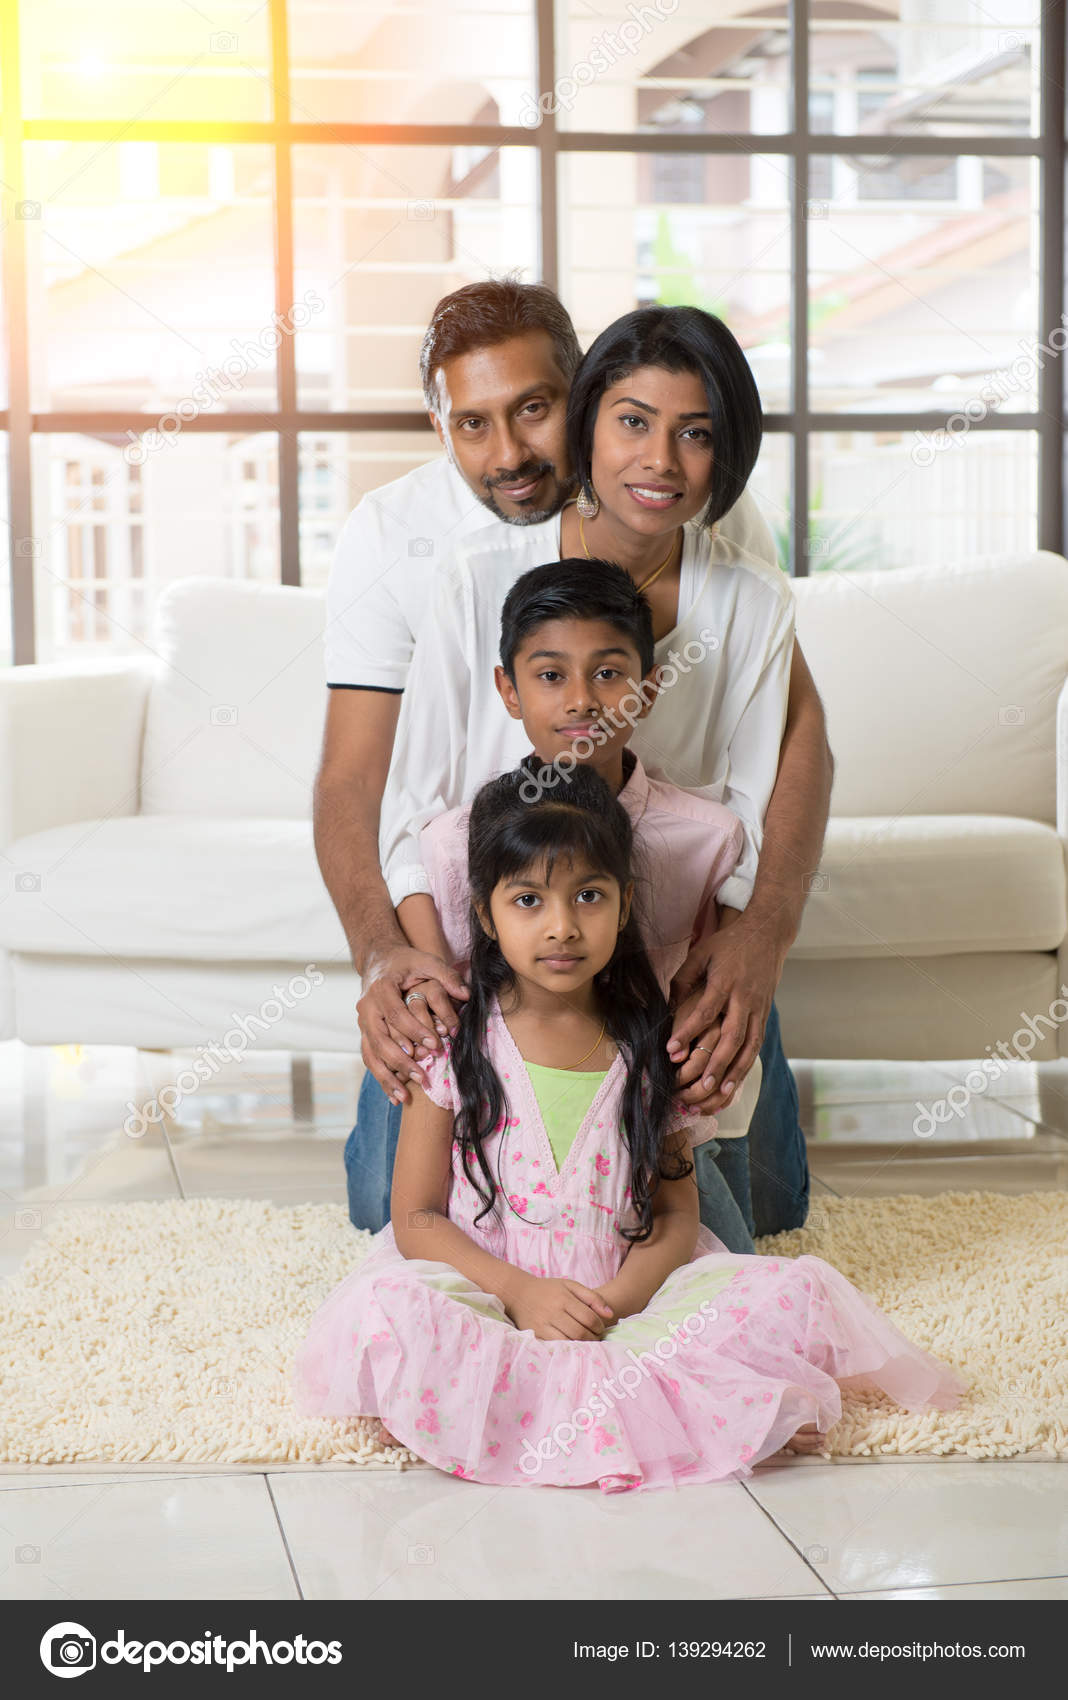 Indian Family photoshoot ideas  Family portrait poses Freedom photography  Family photoshoot